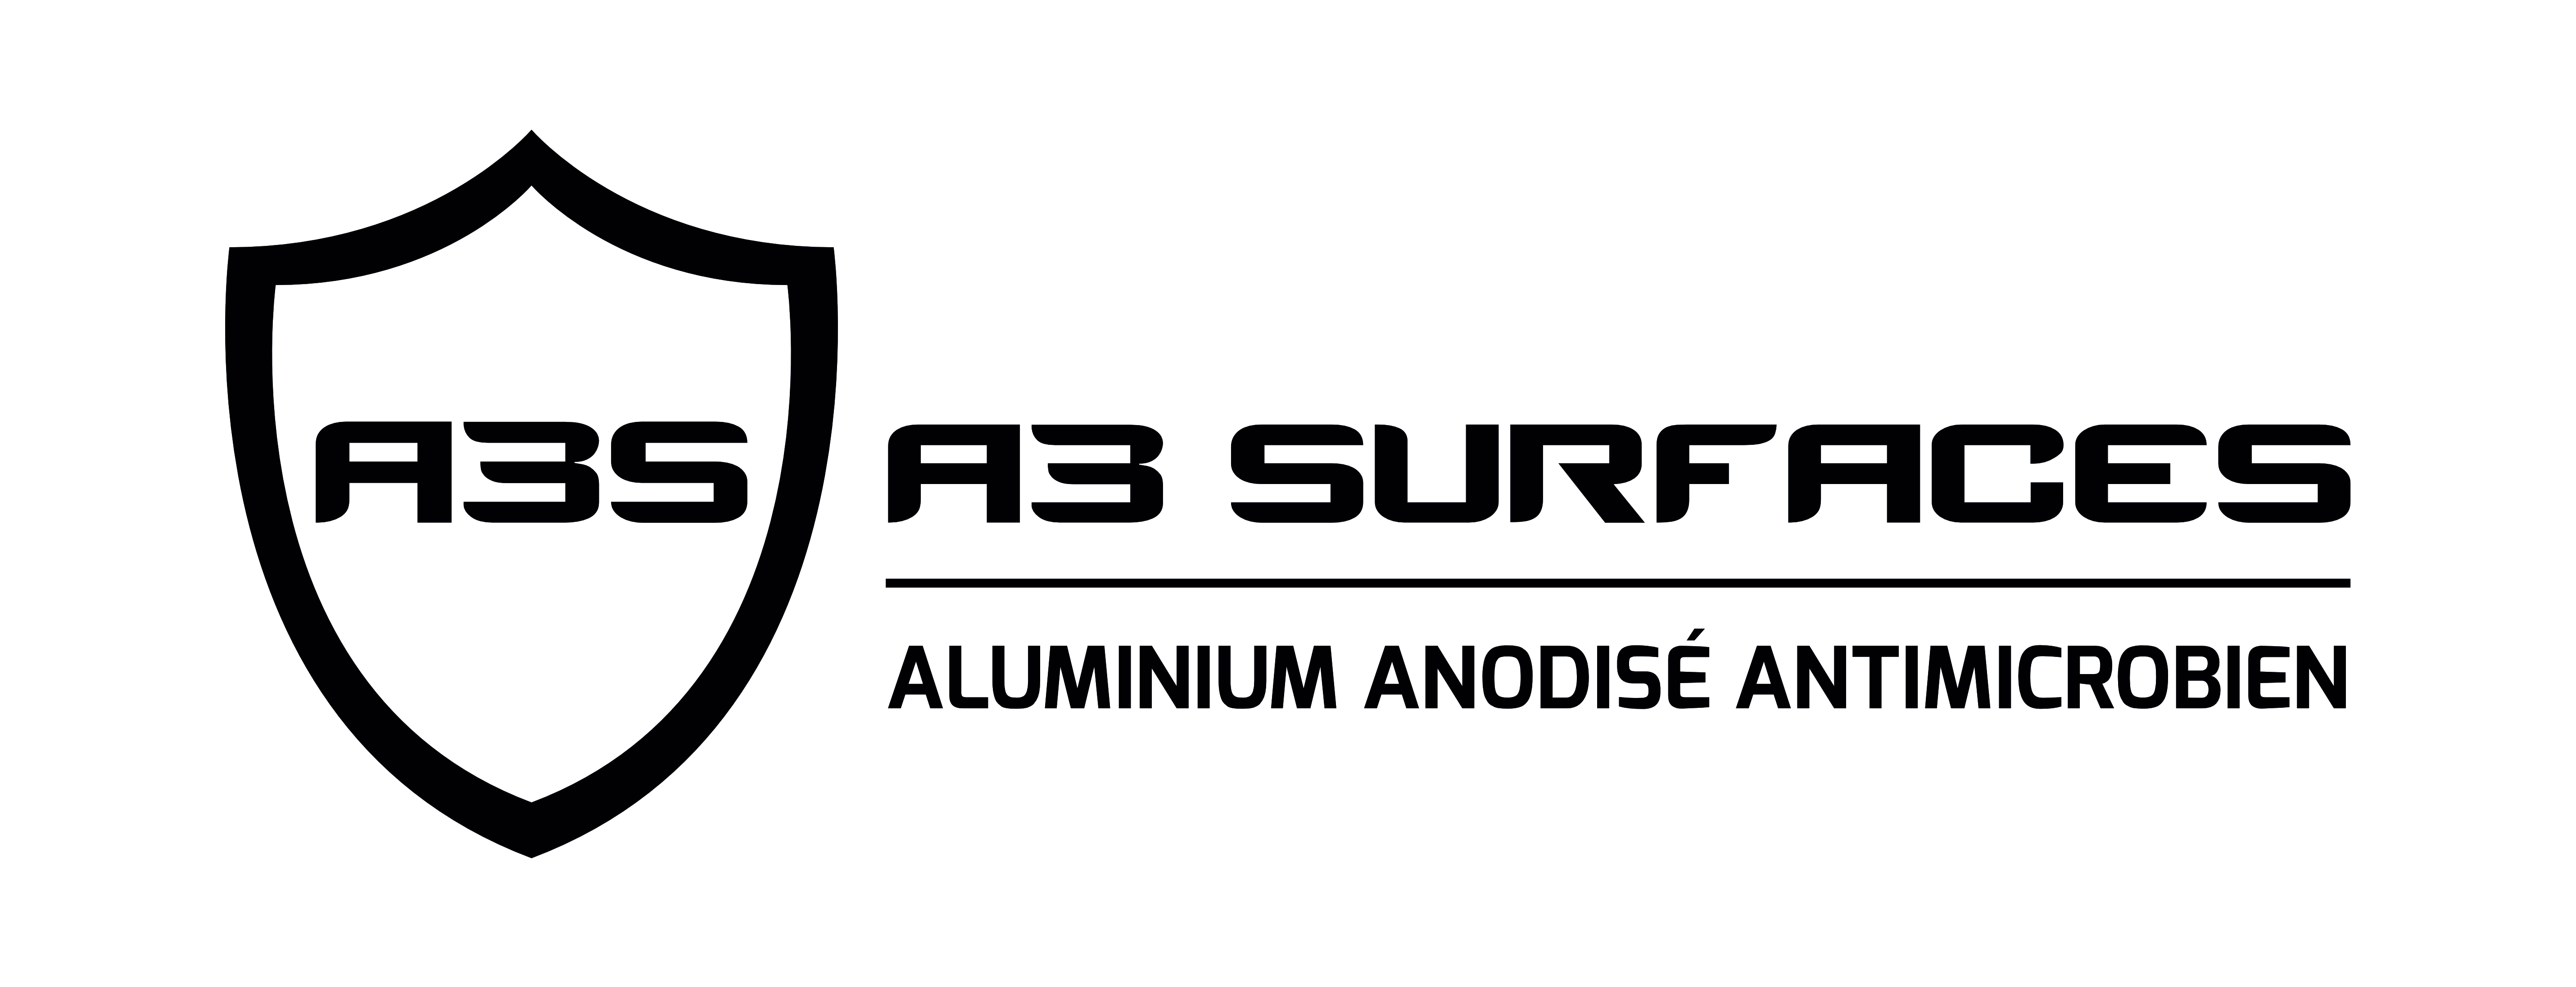 Logo exposant A 3 SURFACES